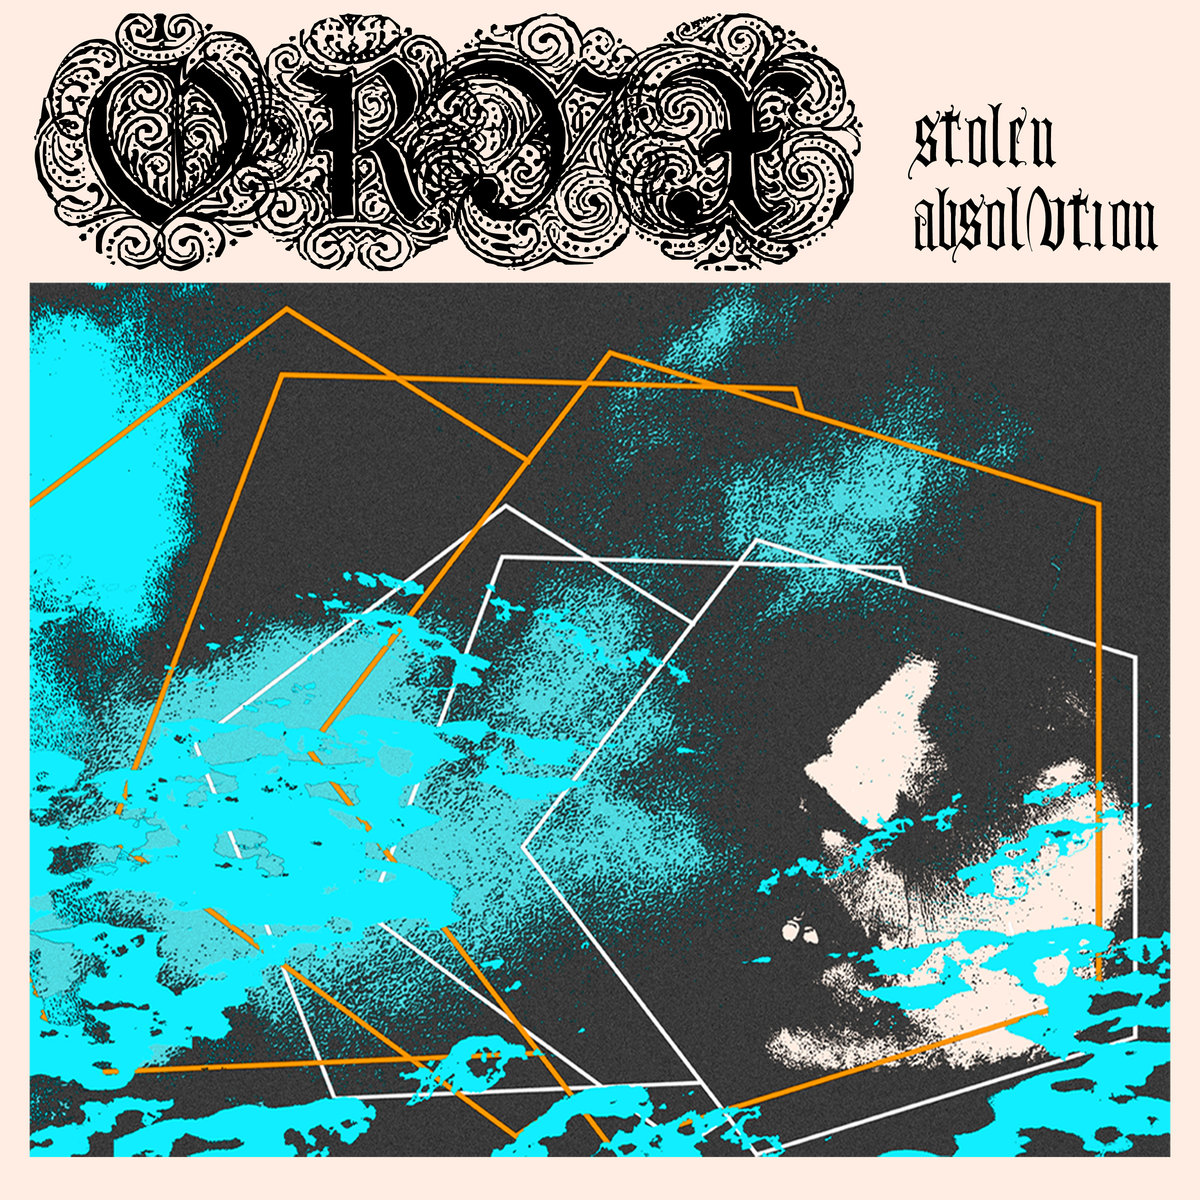 Oryx - Stolen Absolution